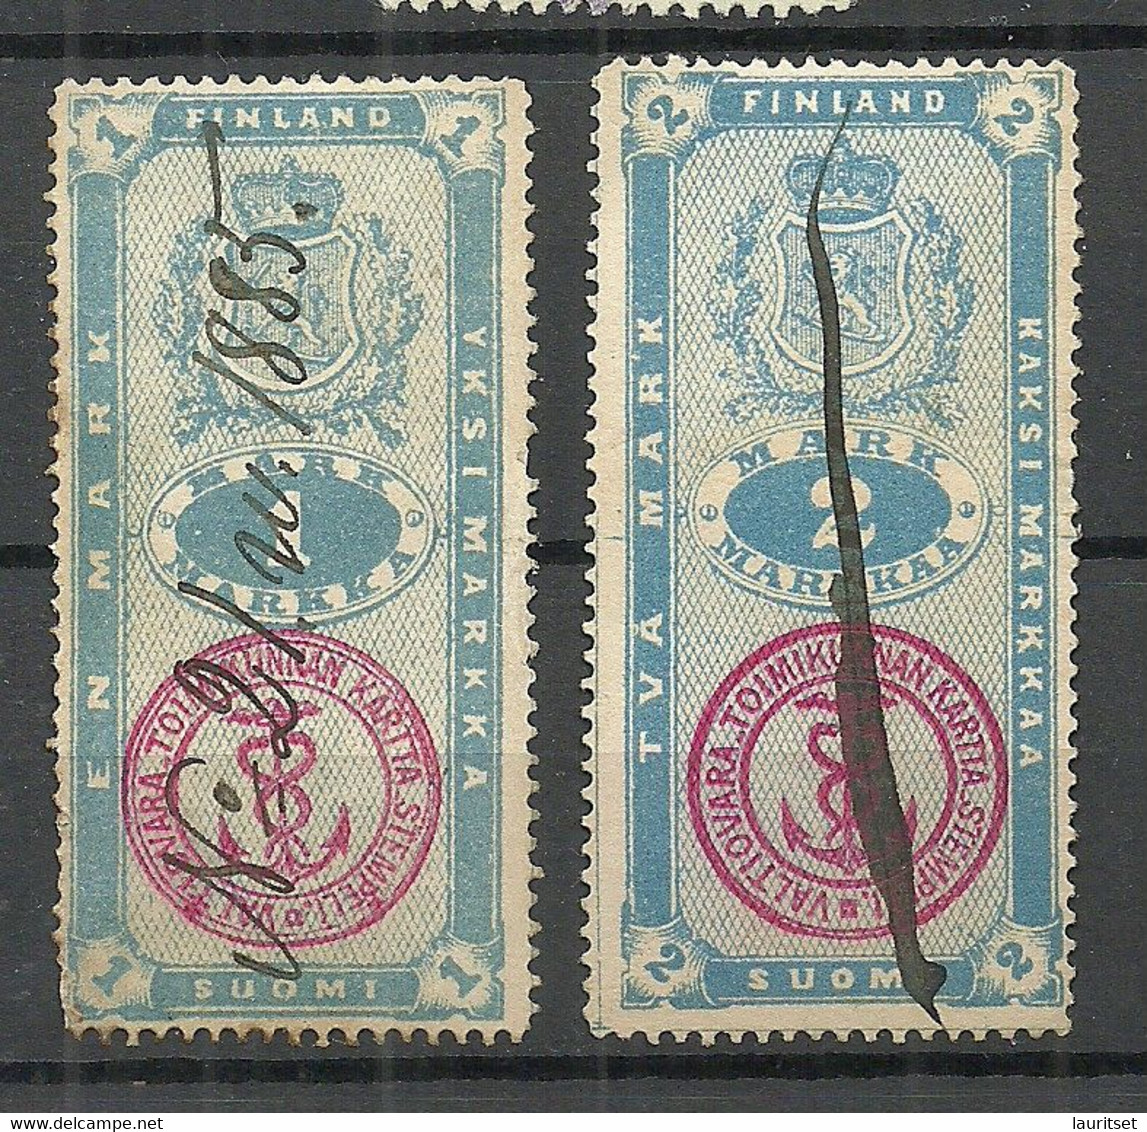 FINLAND FINNLAND O 1885 Stempelmarken Revenue Tax 1 Mark & 2 Mark Documantary Tax - Fiscale Zegels